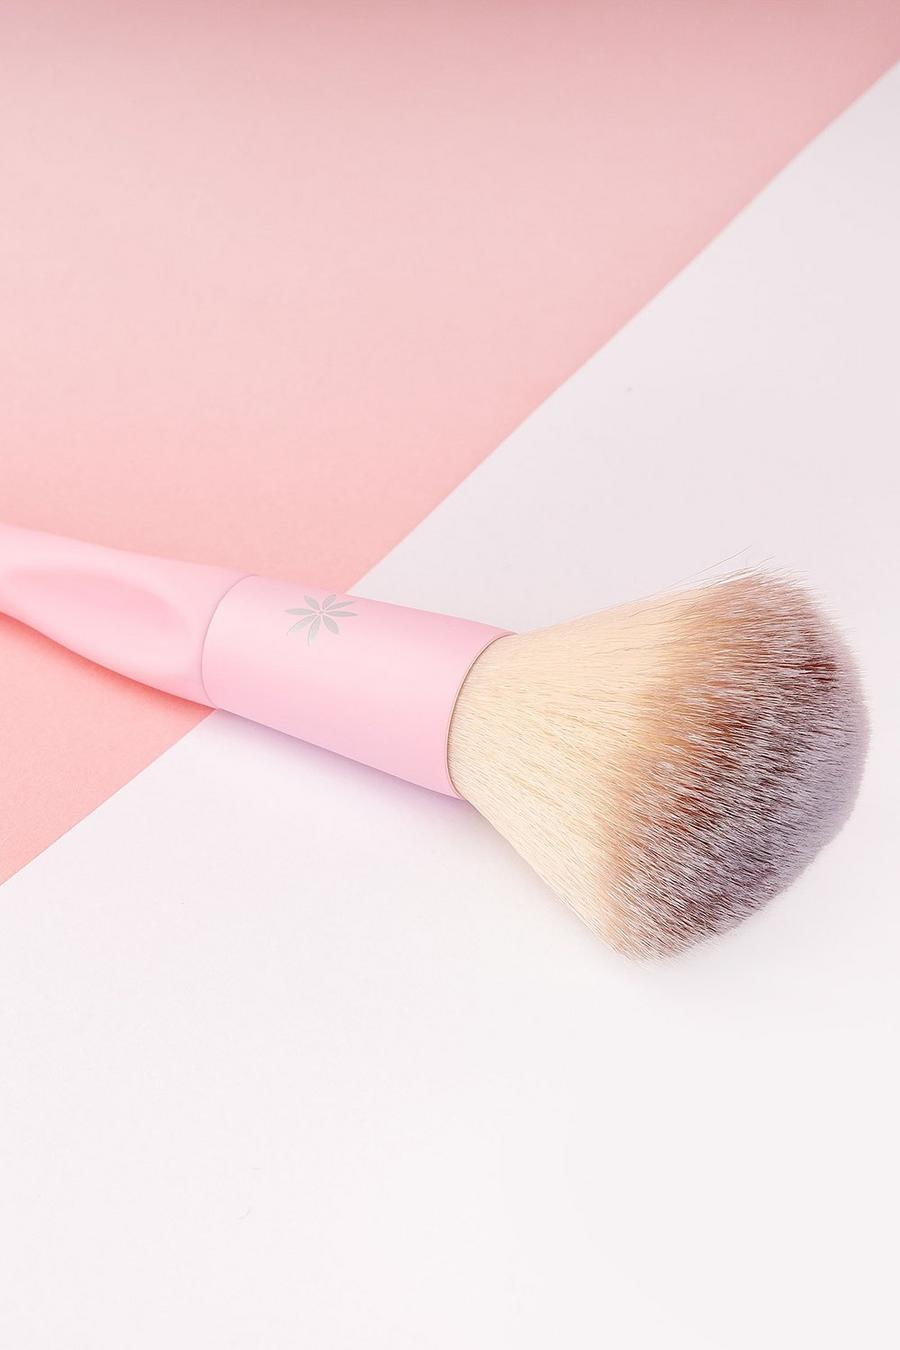 Brushworks - Pinceau à blush, Baby pink rose